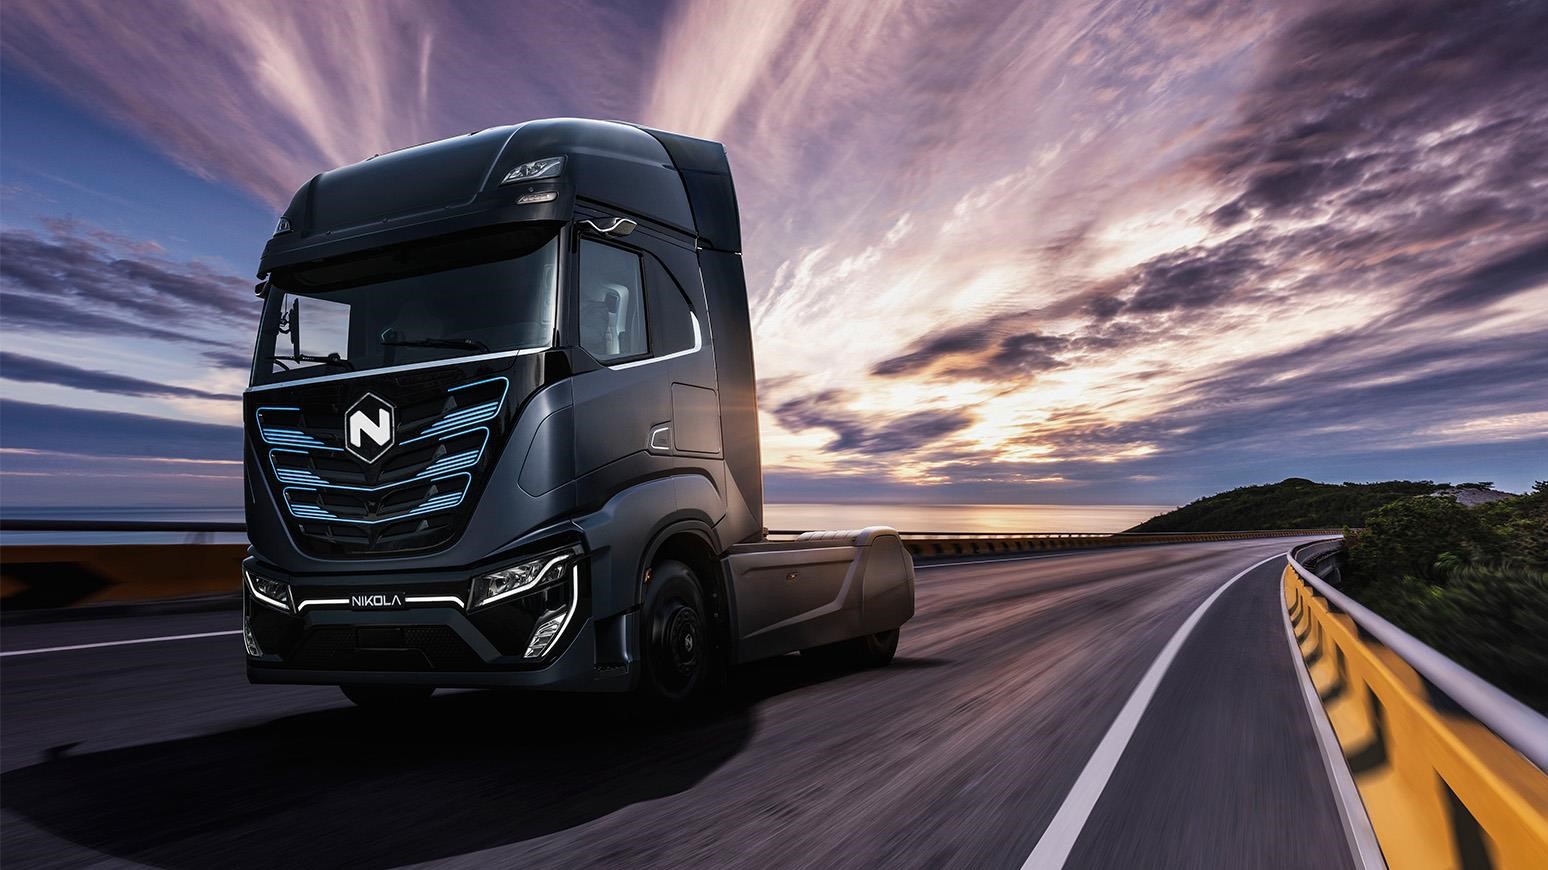 Nikola, IVECO & FPT Industrial Launch Nikola TRE, Reveal Goal To Bring More Zero-Emissions Trucks To Europe & North America